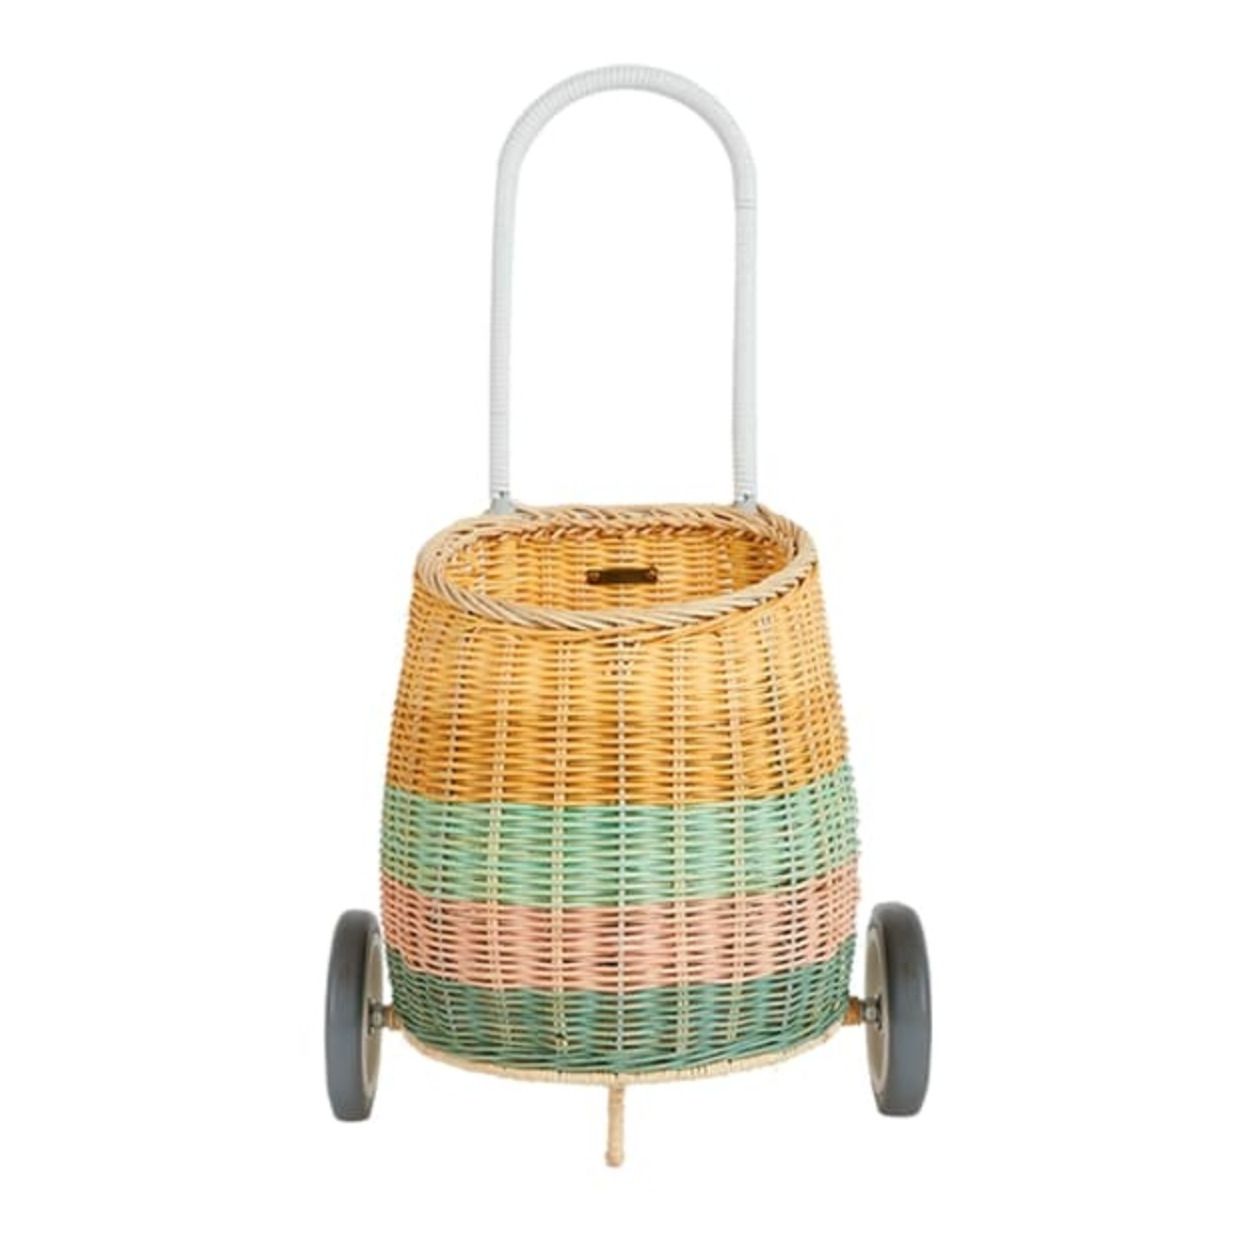 Olli Ella - Luggy Children's Rattan Basket on Wheels - Olli Ella x Smallable  | Smallable